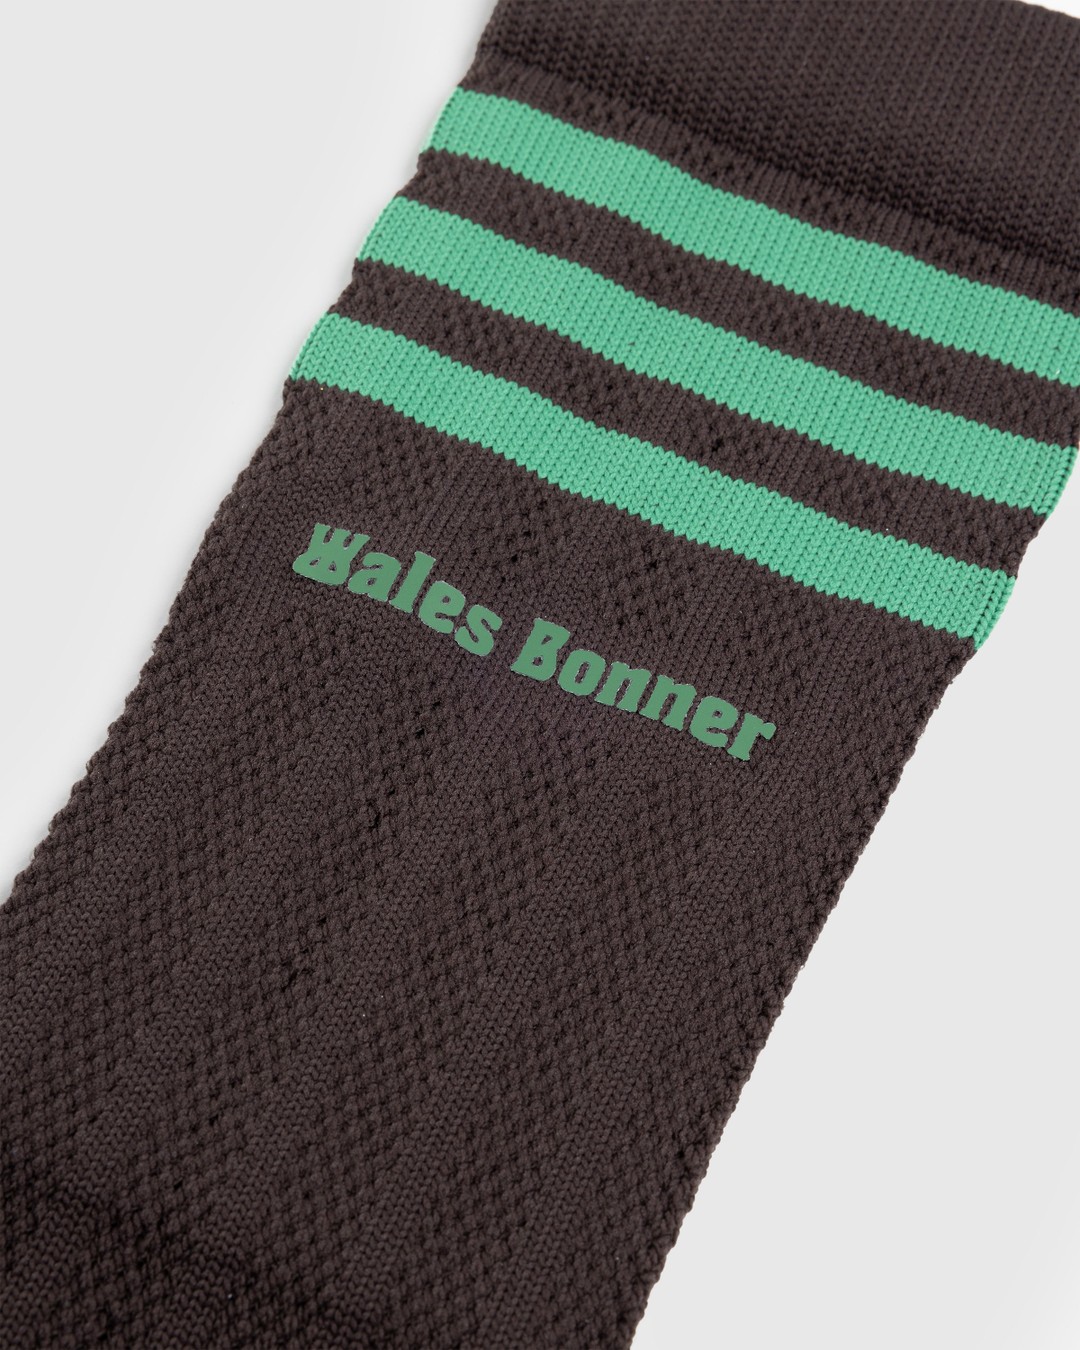 Adidas x Wales Bonner – Crochet Socks Three-Pack Multi - Socks - Multi - Image 6